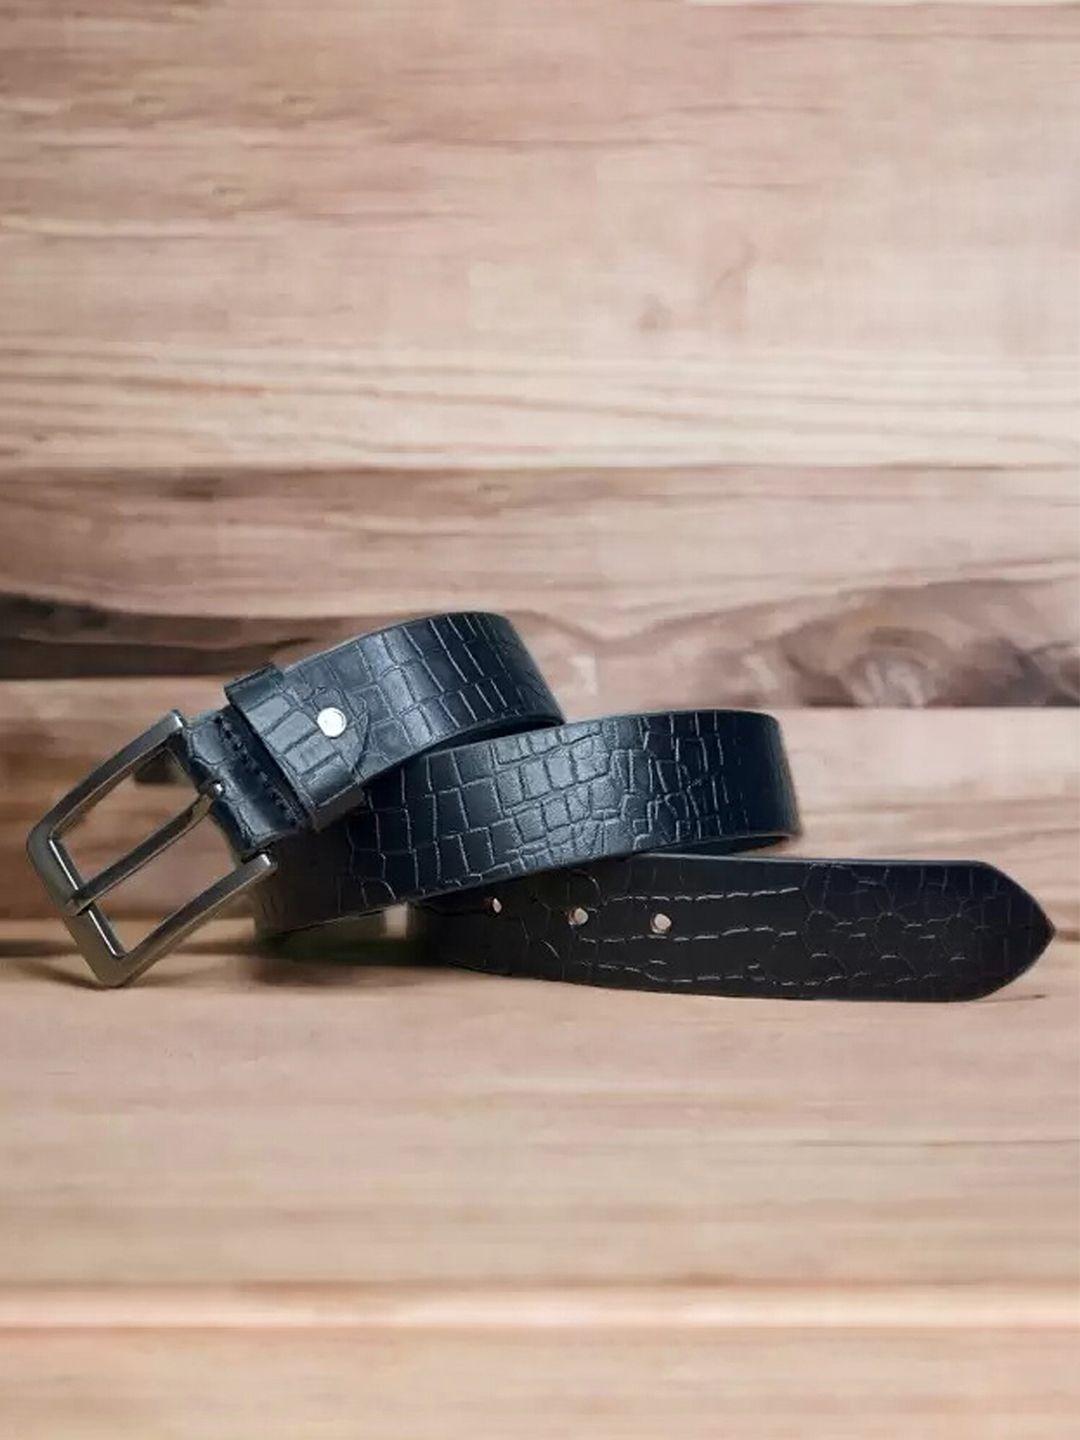 provogue-textured-leather-belt